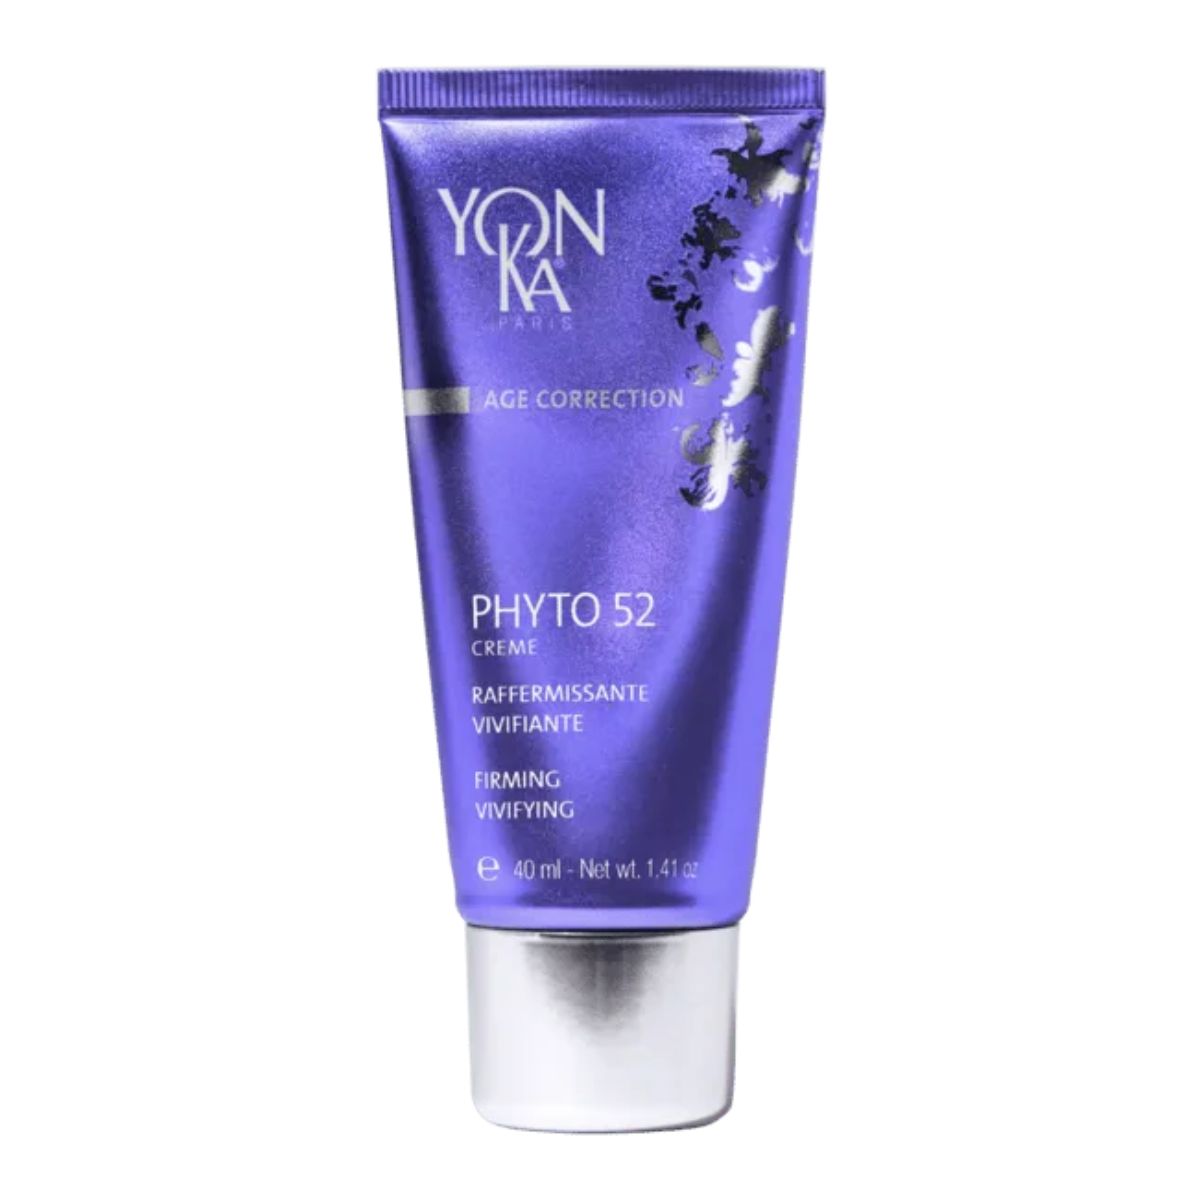 YonKa Phyto 52 is a firming night cream